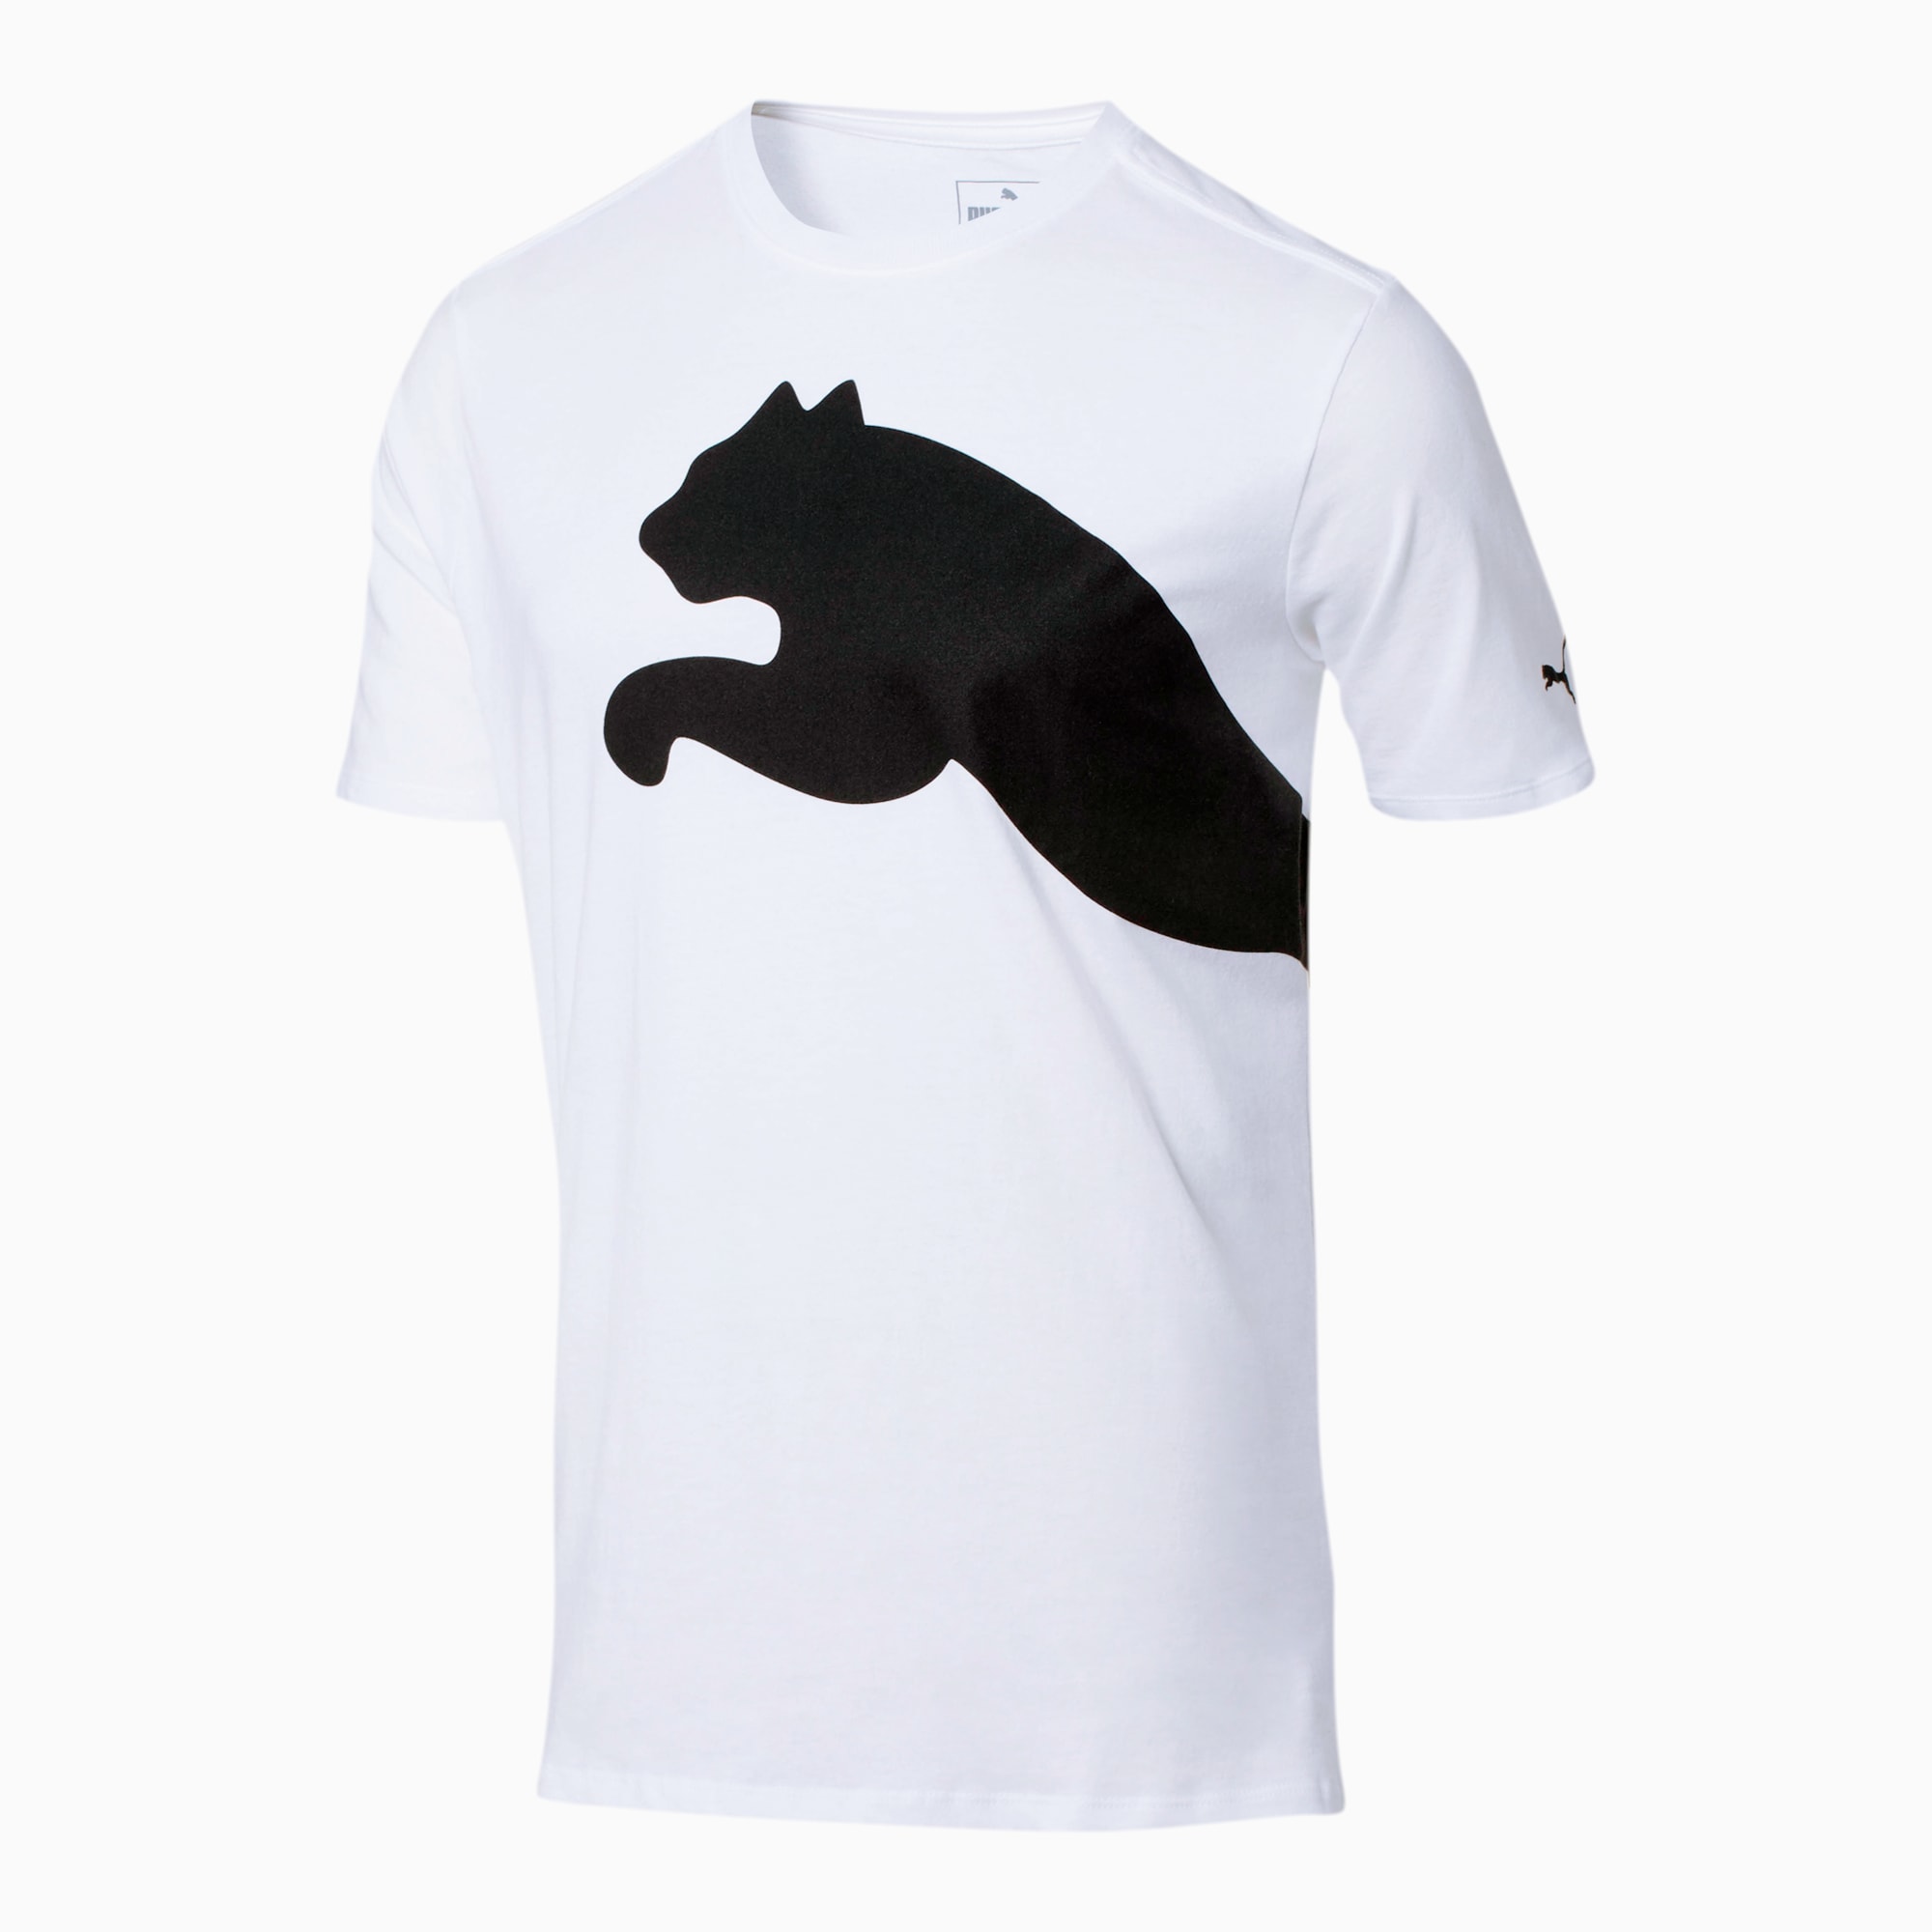 Camiseta Puma Oversize Logo Tee SS19 black